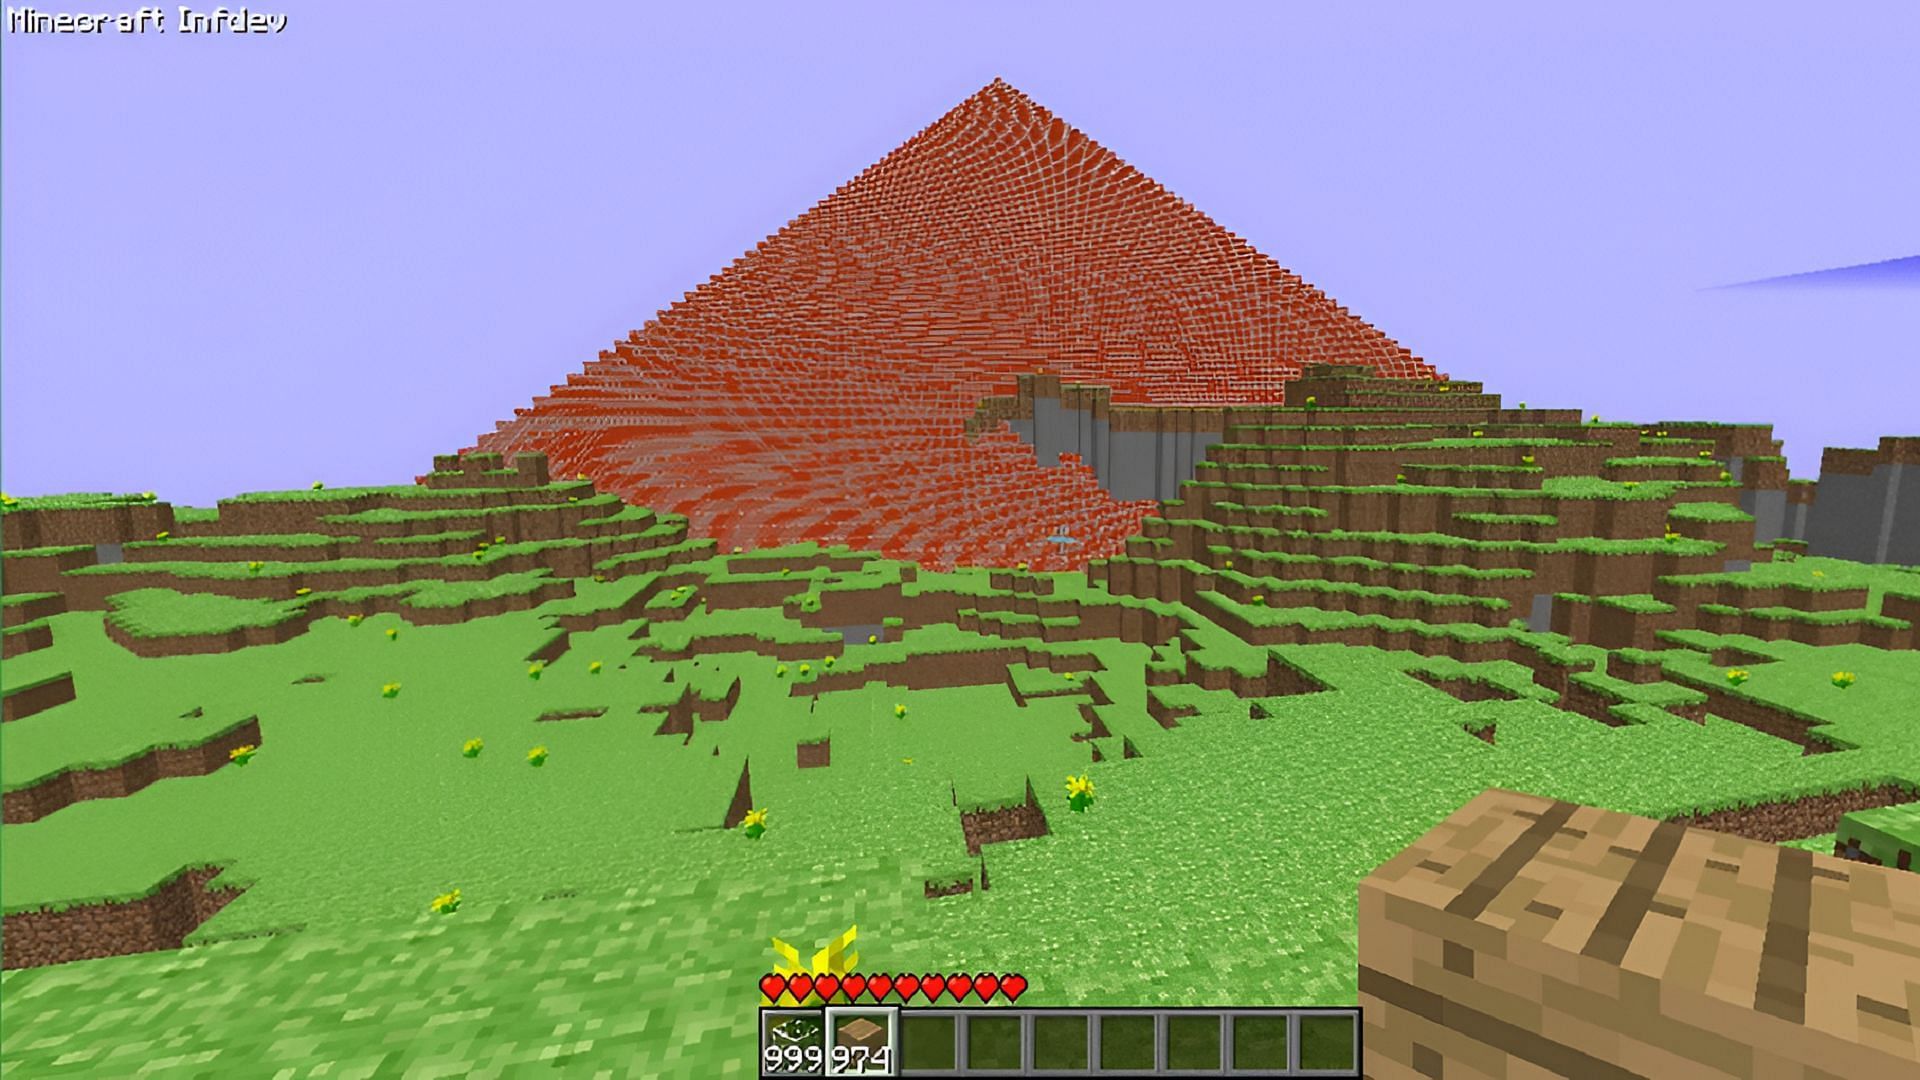 A naturally-generating brick pyramid in Minecraft